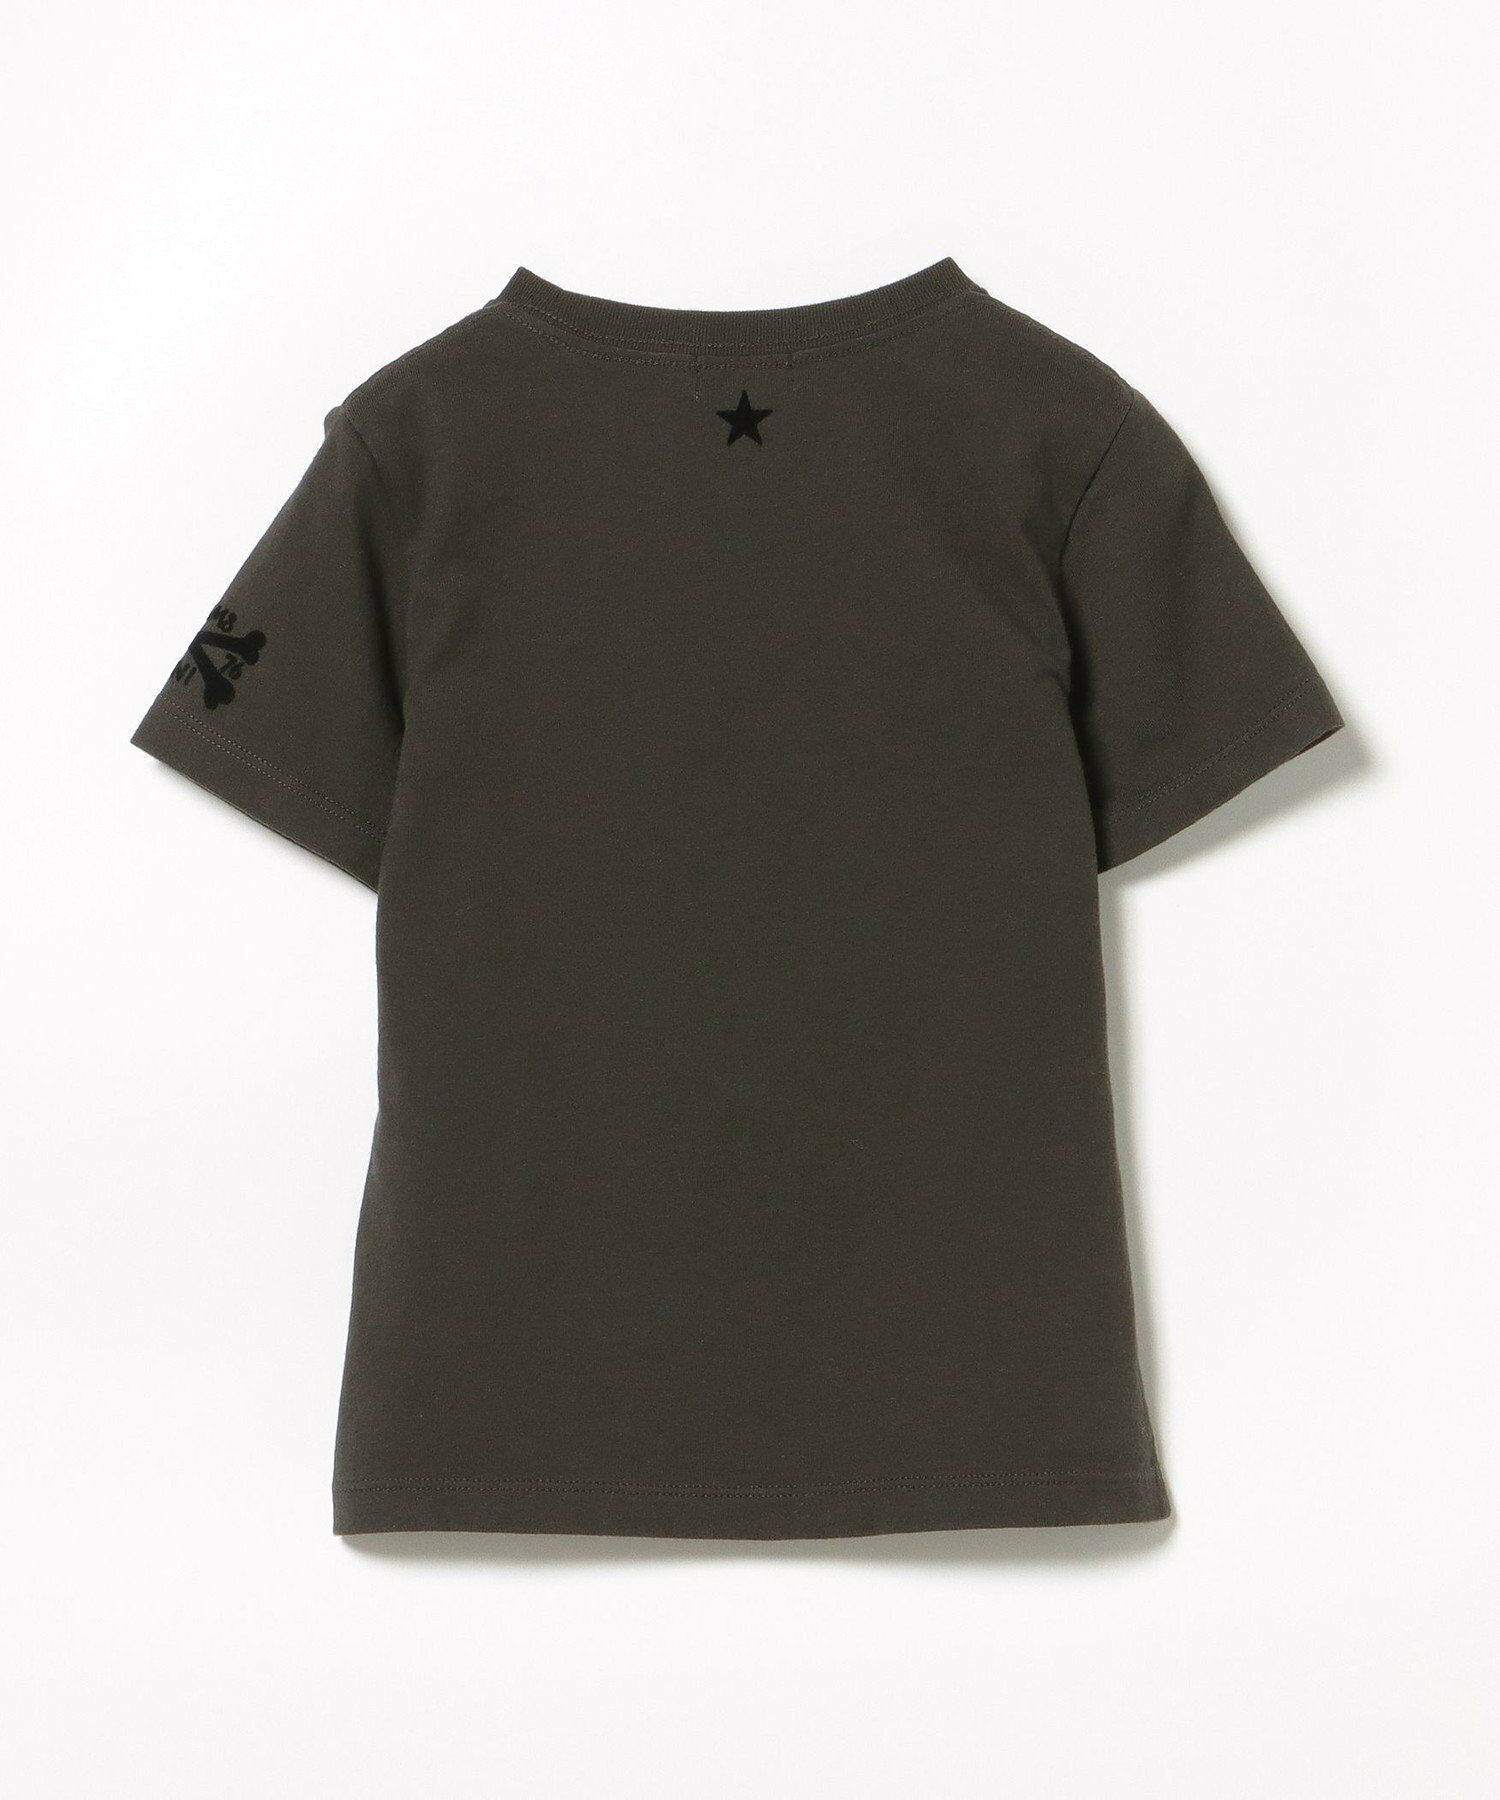 BEAMS mini / スカル フロッキー Tシャツ 24SS(90~150cm)